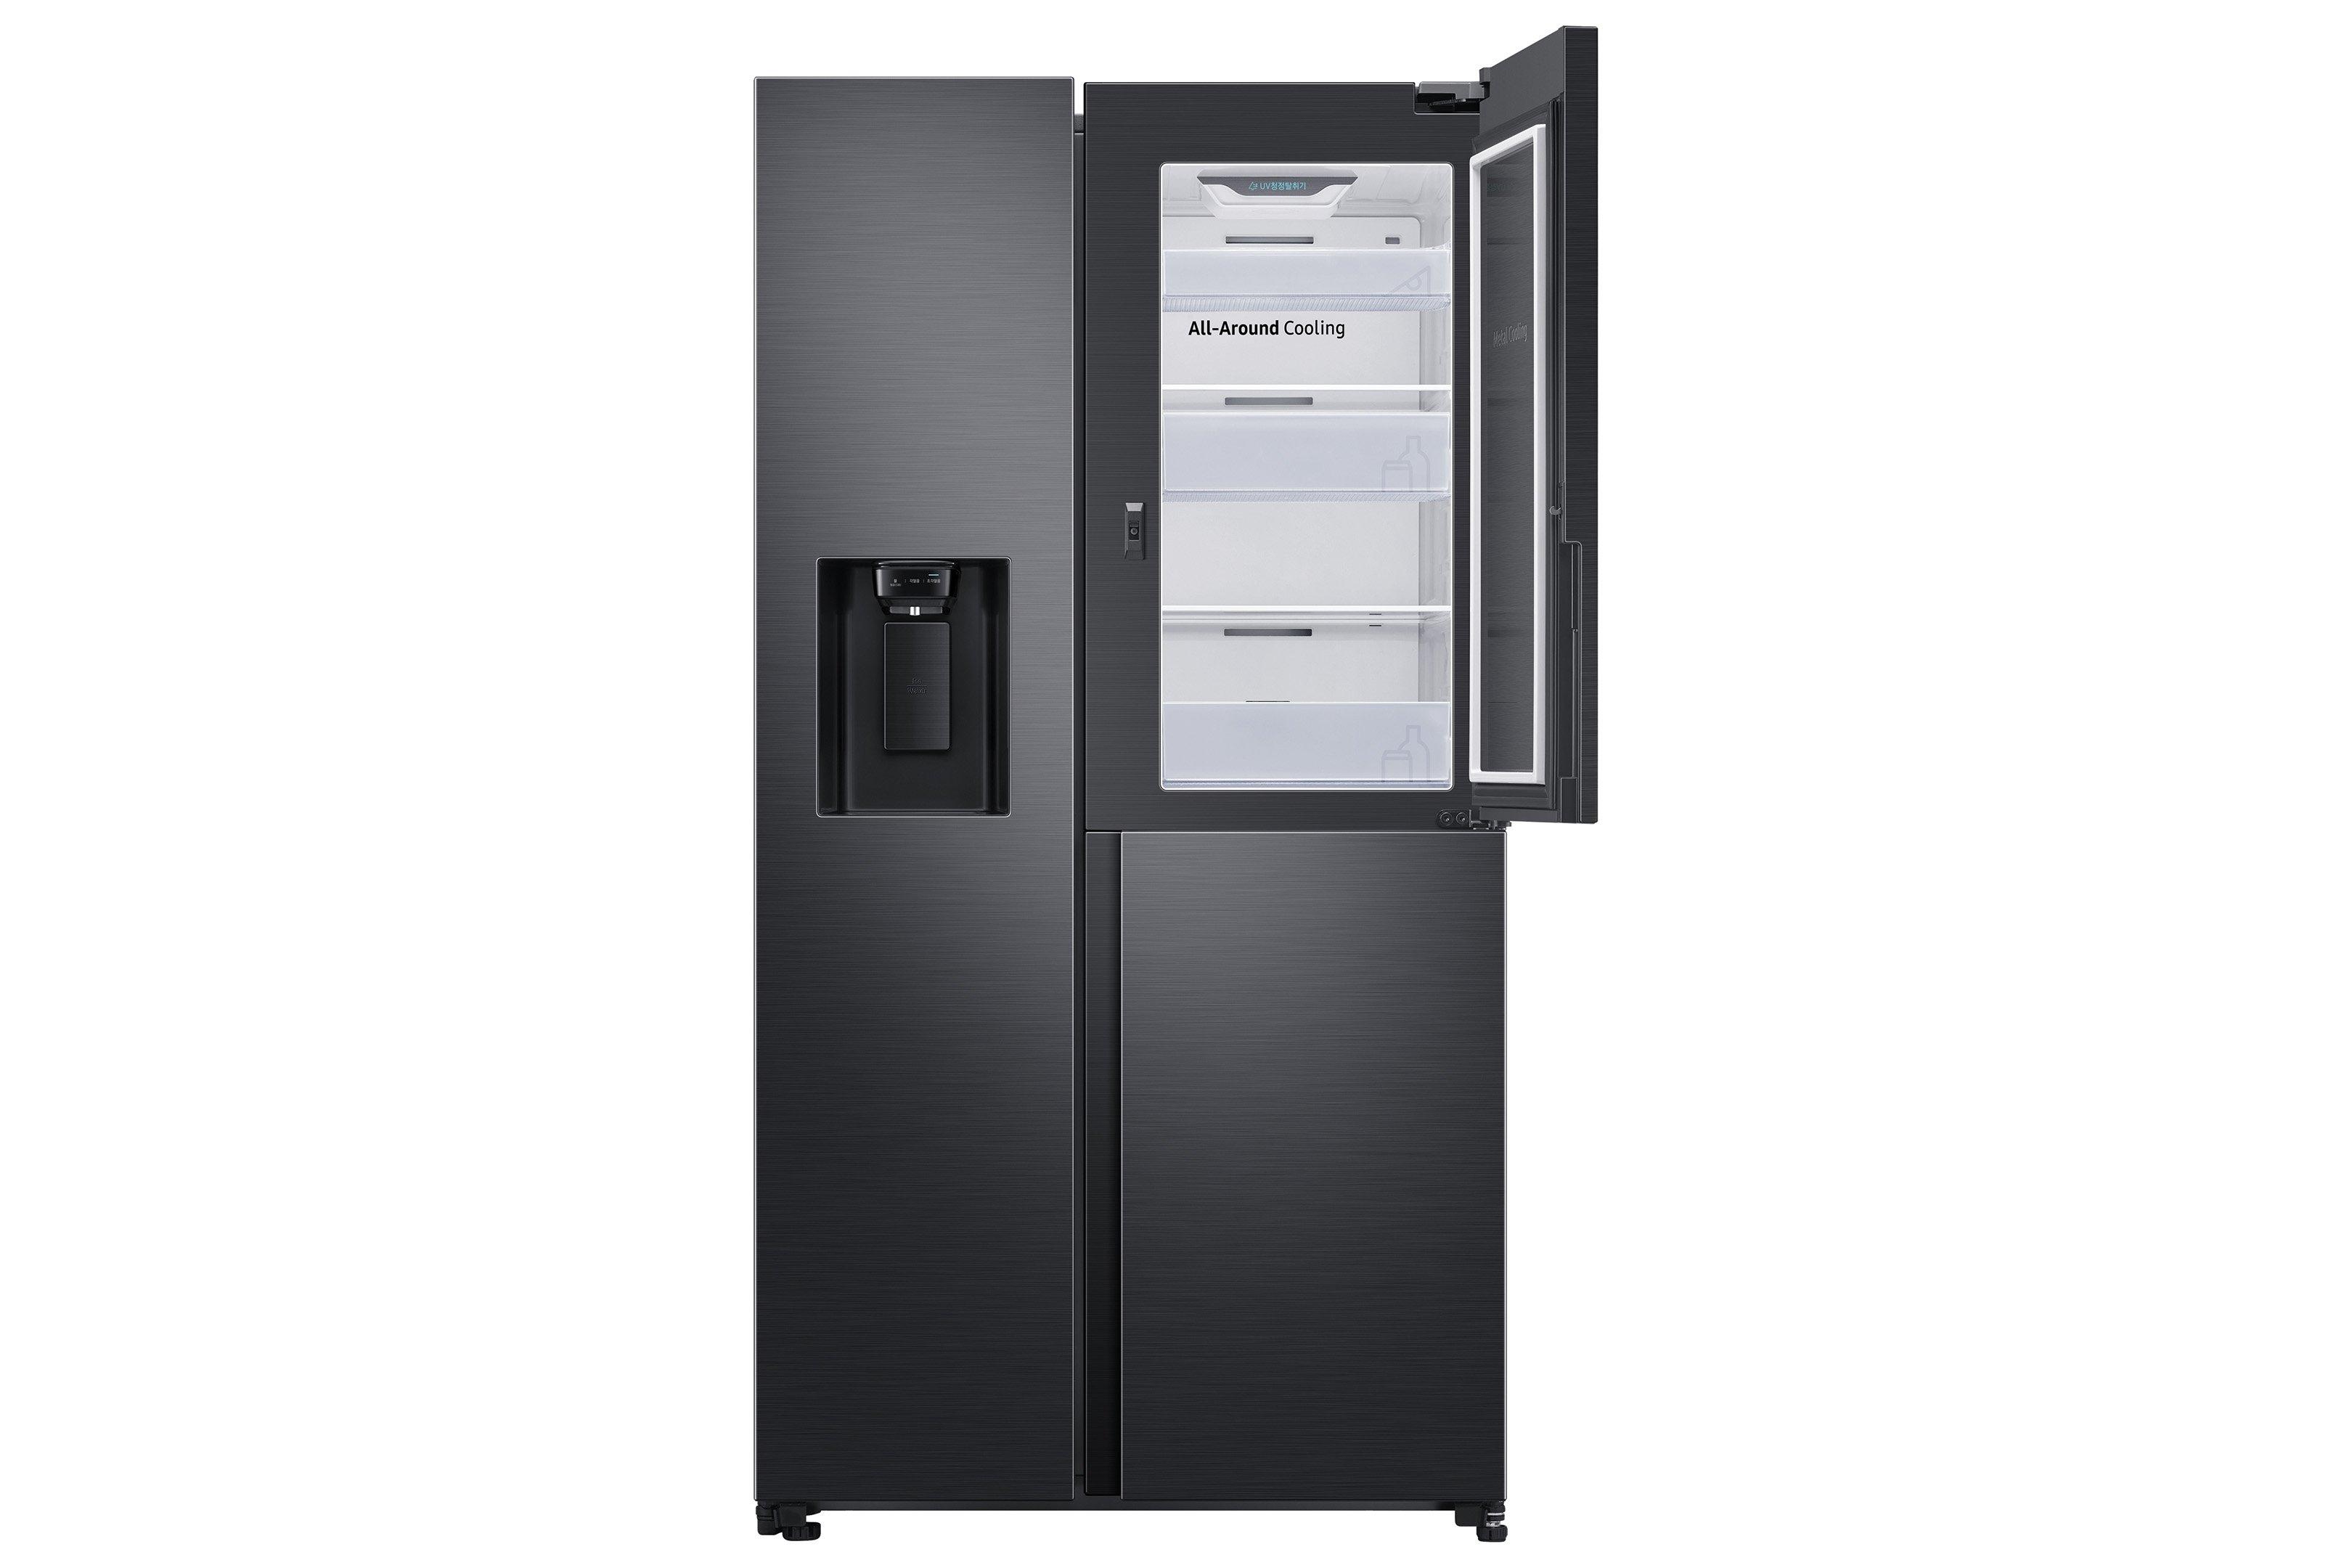 Refrigeradora Bord Side By Side 510LT SBS510NFS-M